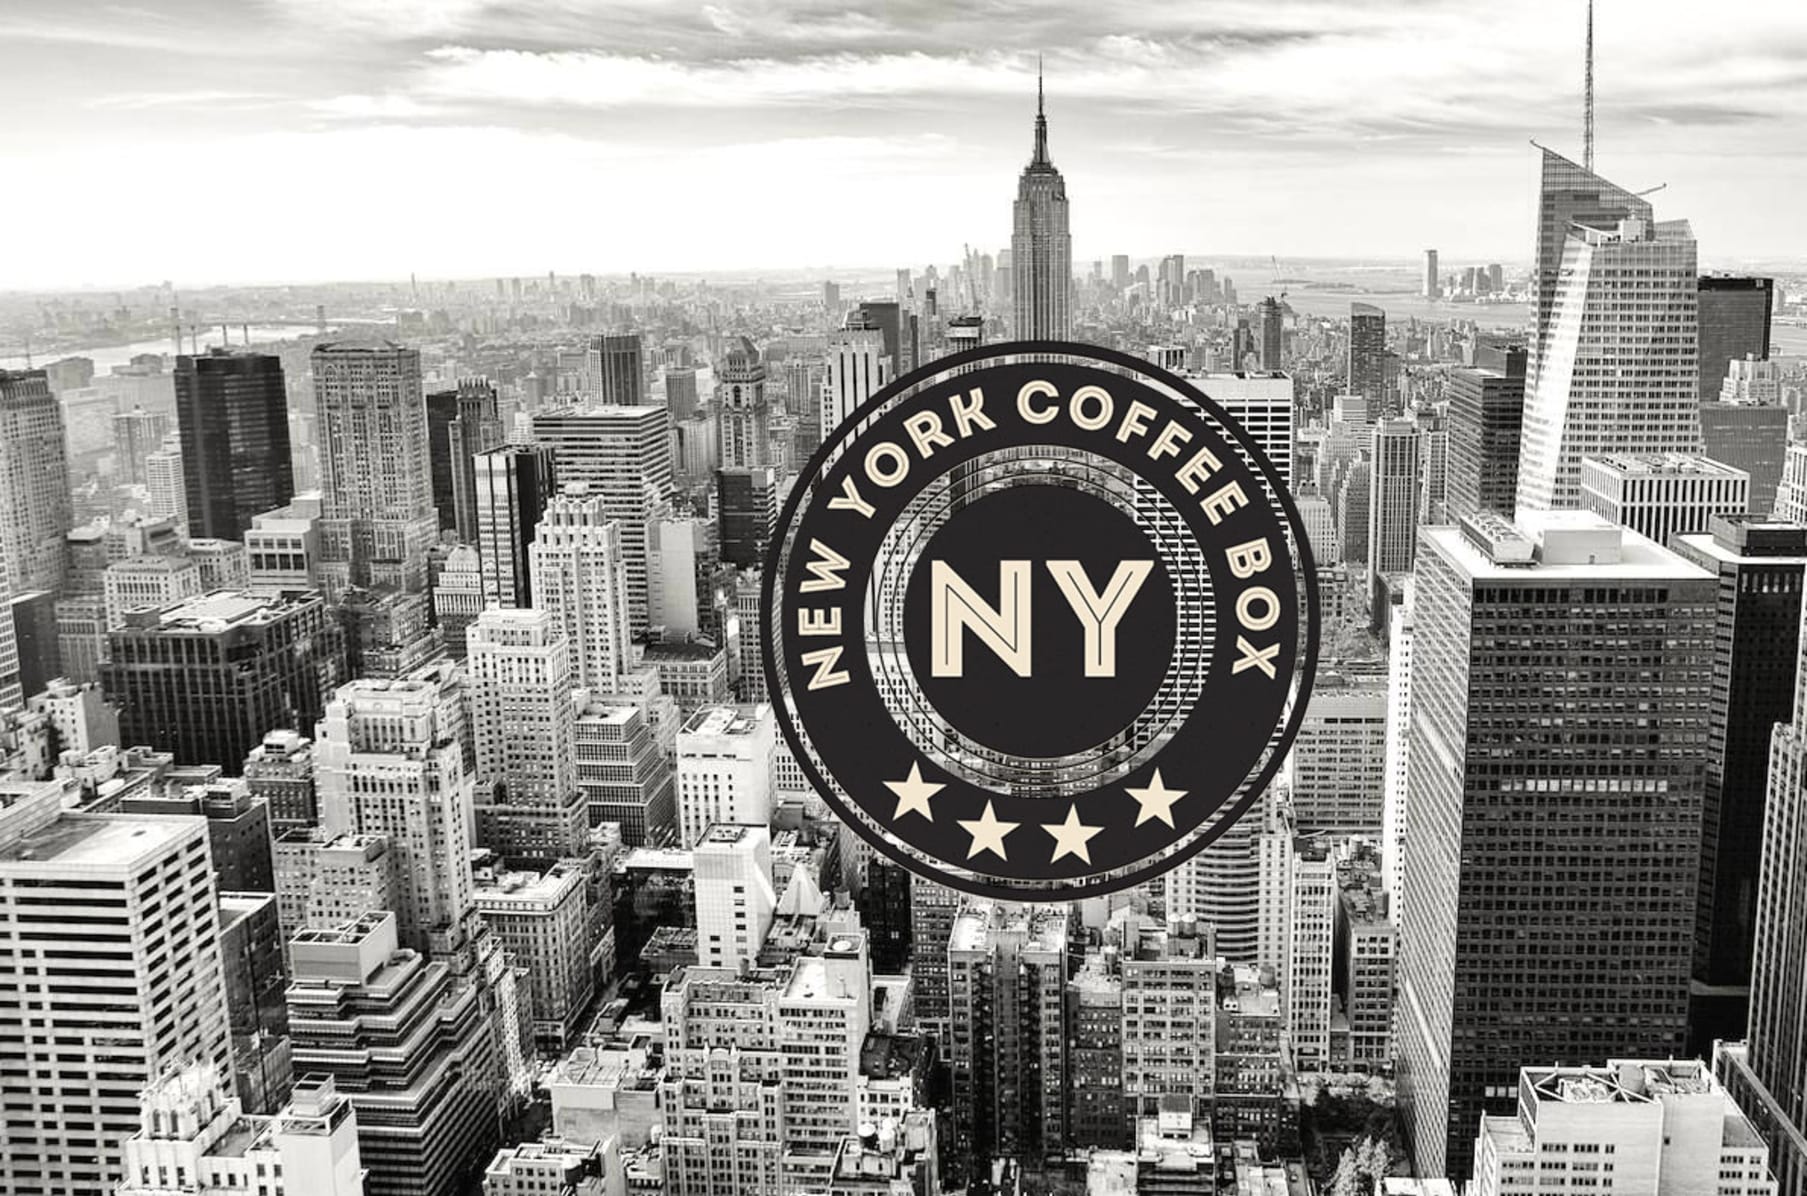 new york gourmet coffee